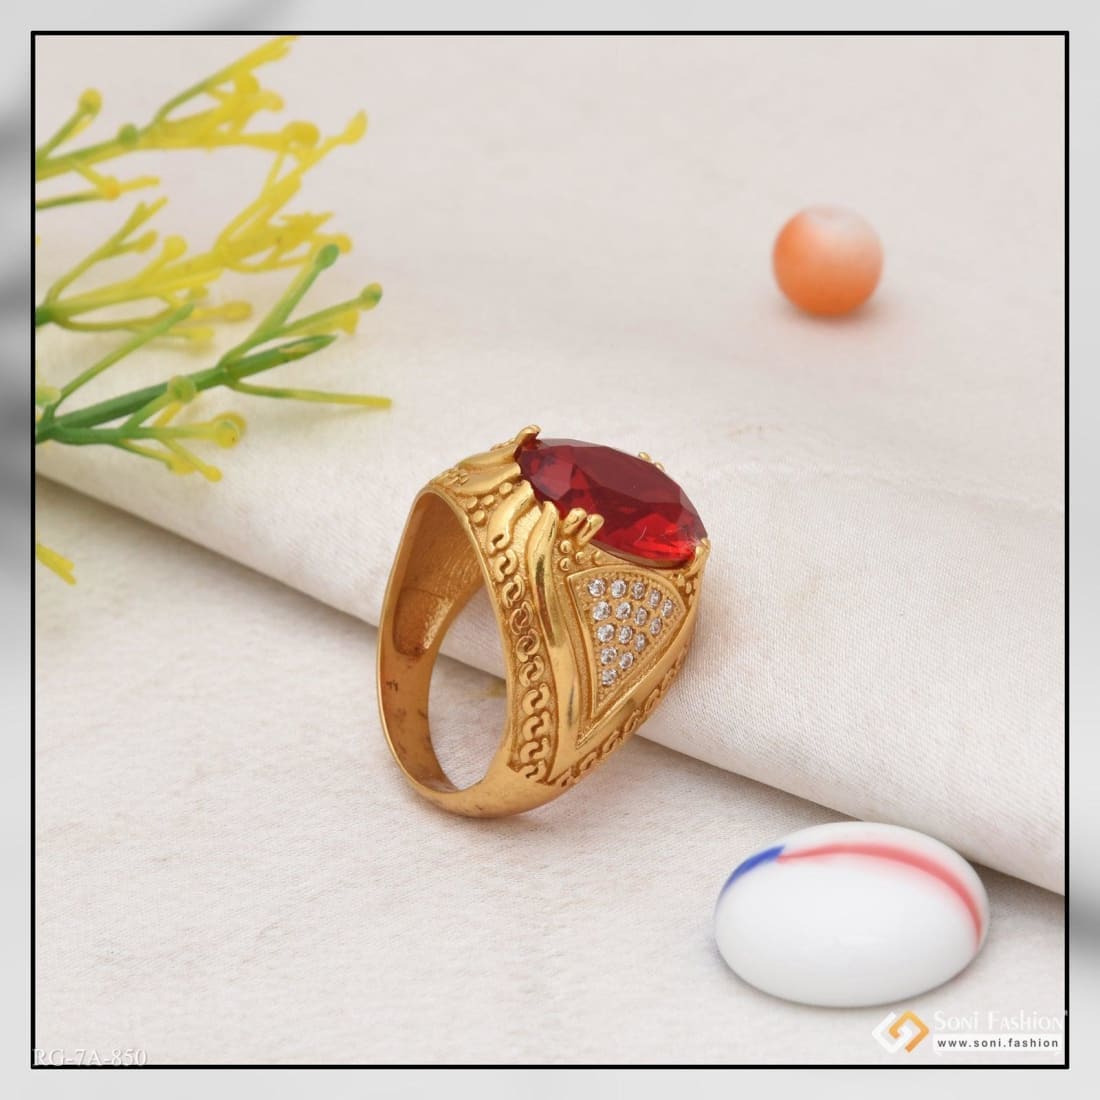 1 gram gold forming black stone with diamond antique design ring - – Soni  Fashion®